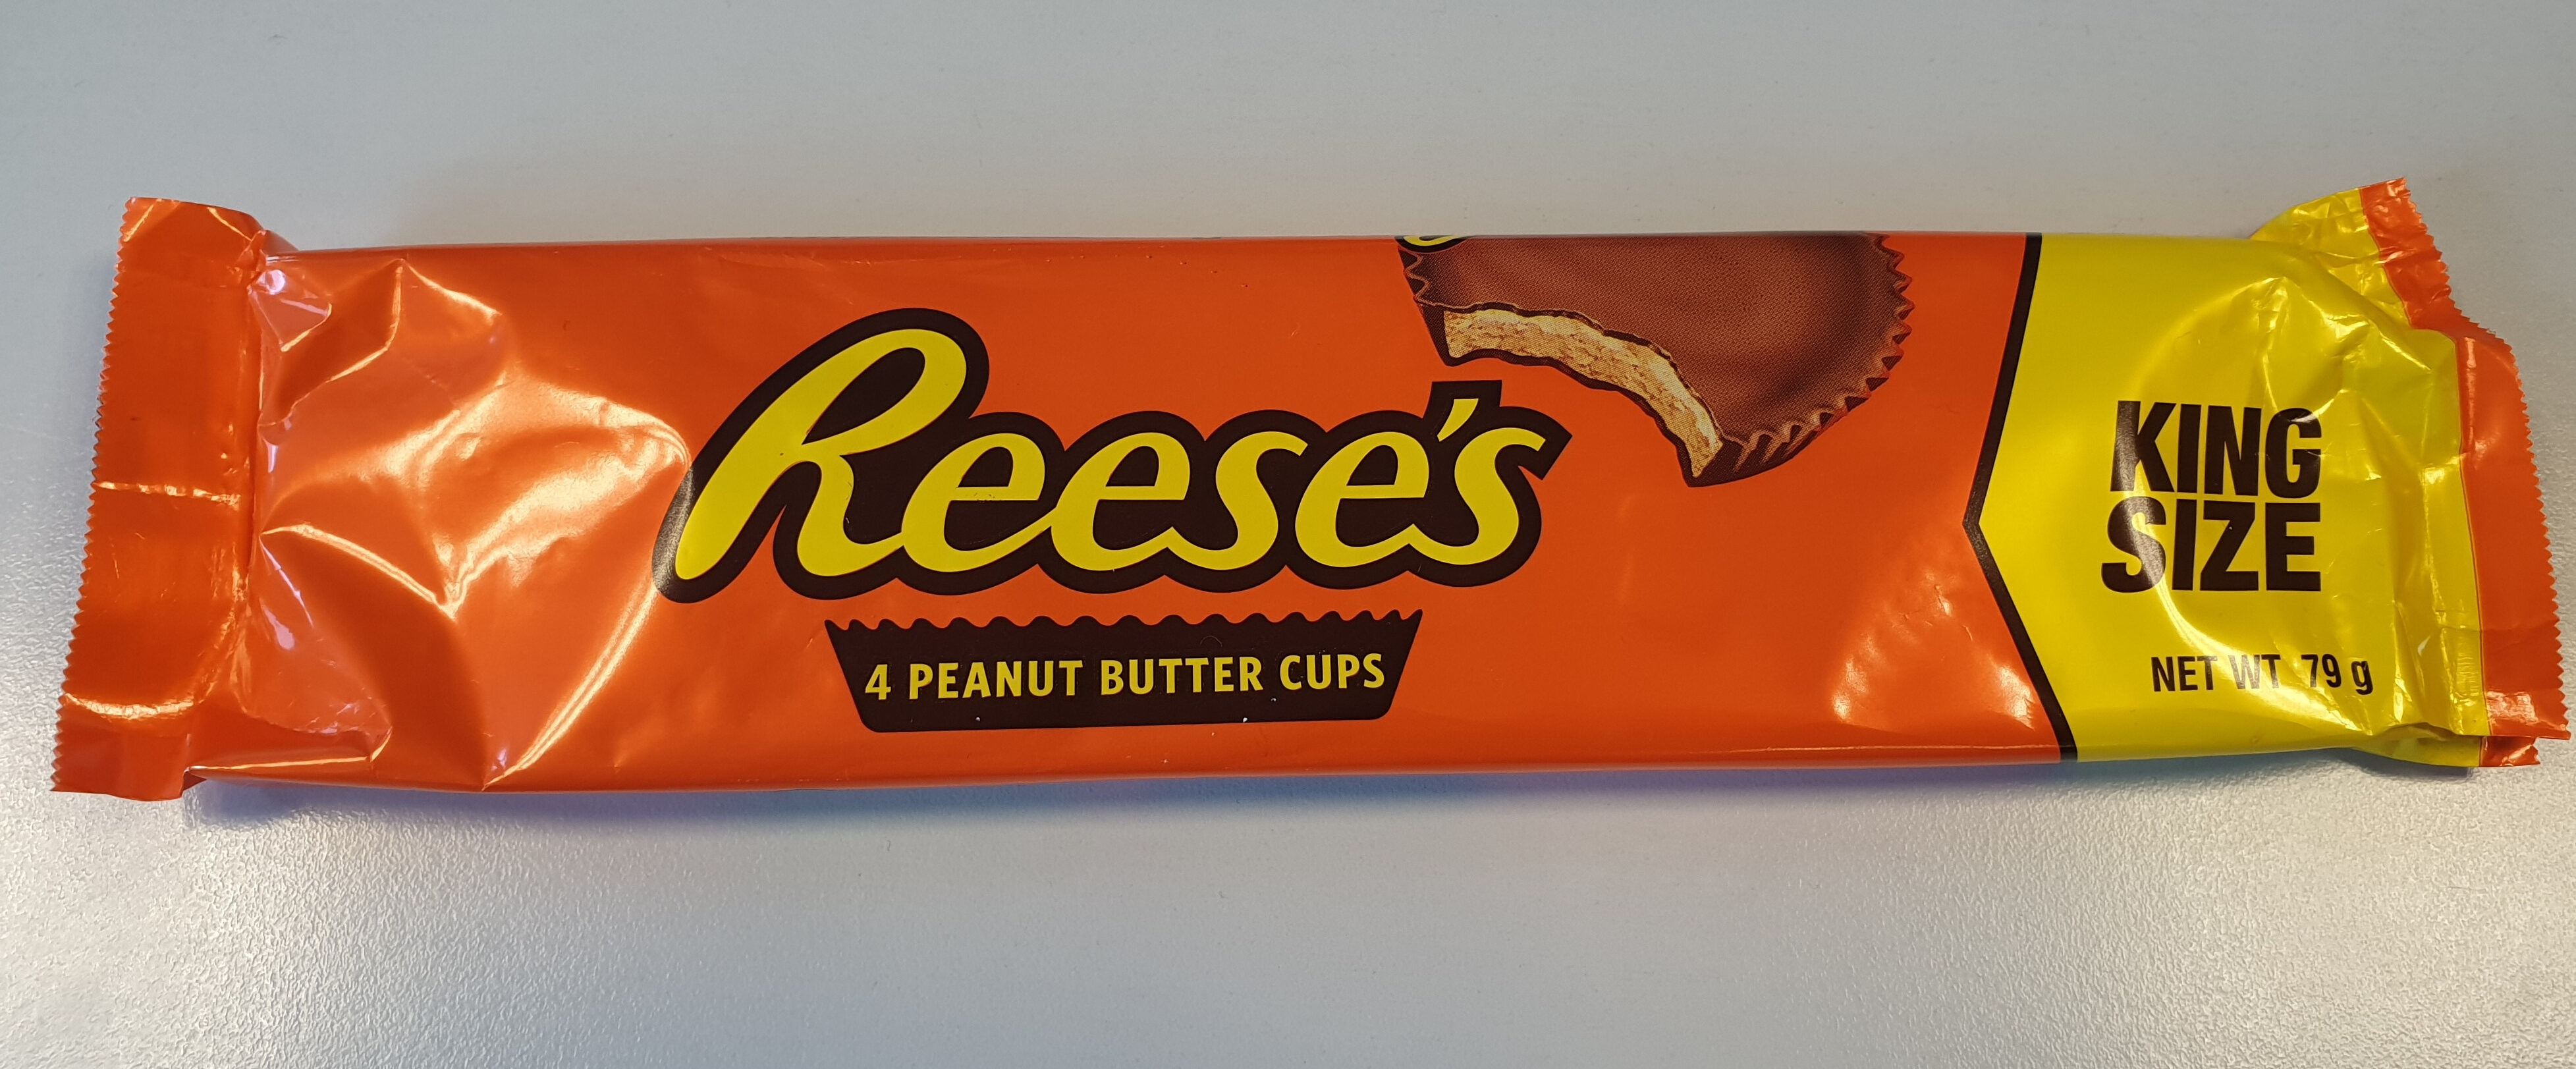 Reese's Peanut Butter Cups 4er King Size - Producte - en